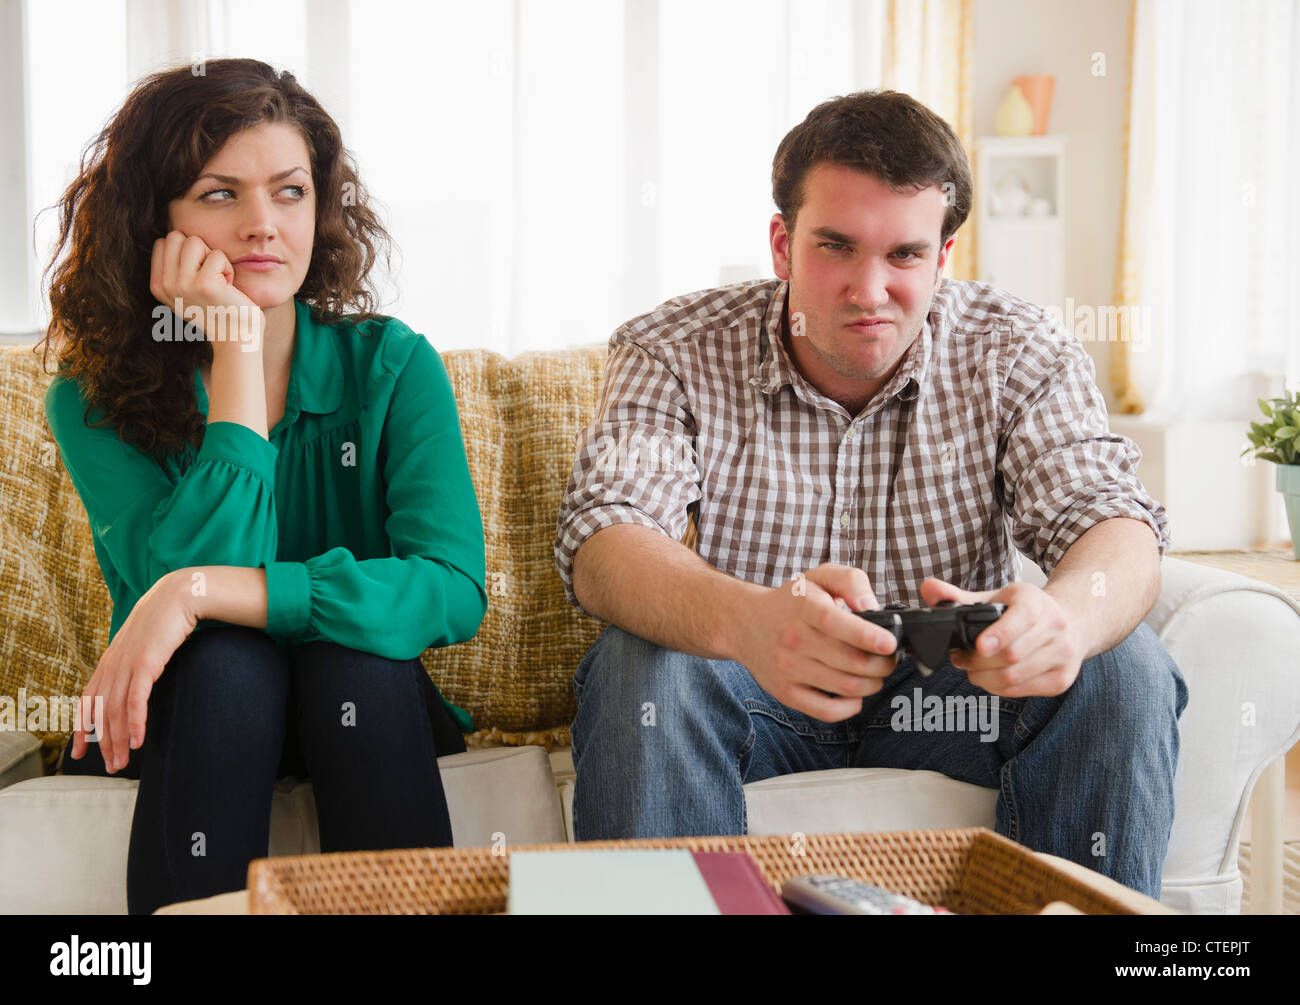 USA, New Jersey, Jersey City, Couple sitting on sofa, man playing video game Stock Photo